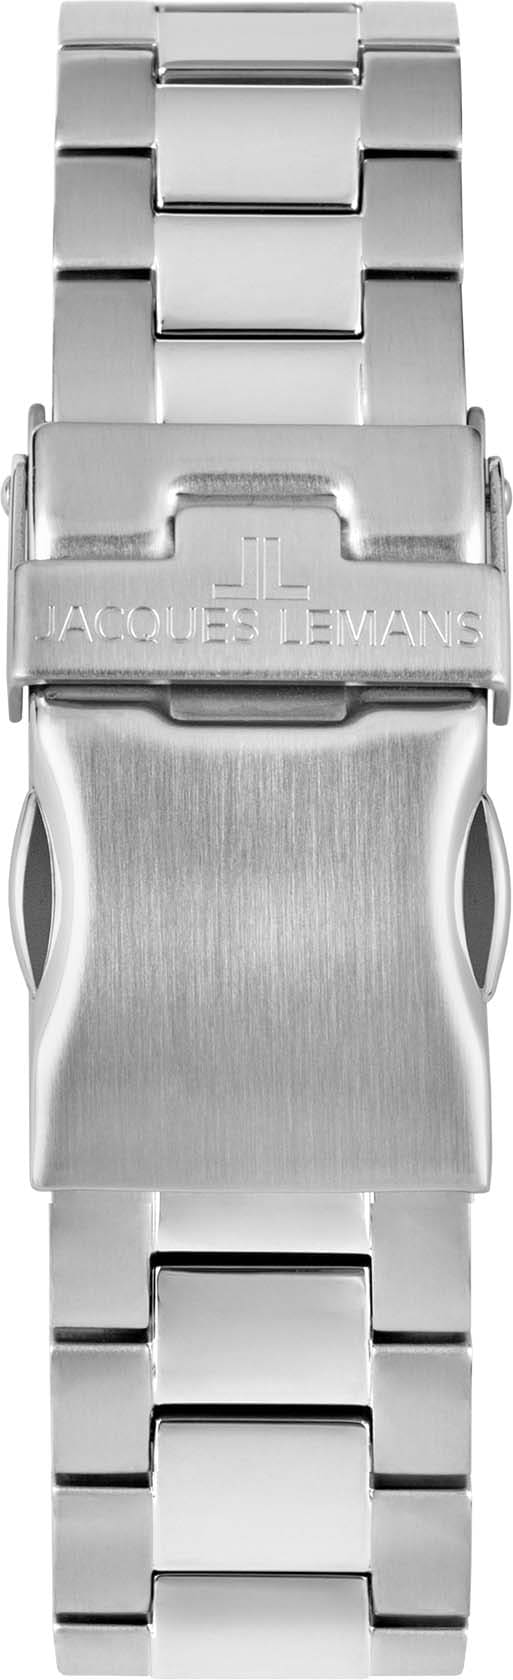 Jacques Lemans Multifunktionsuhr »42-11F« kaufen | I\'m walking